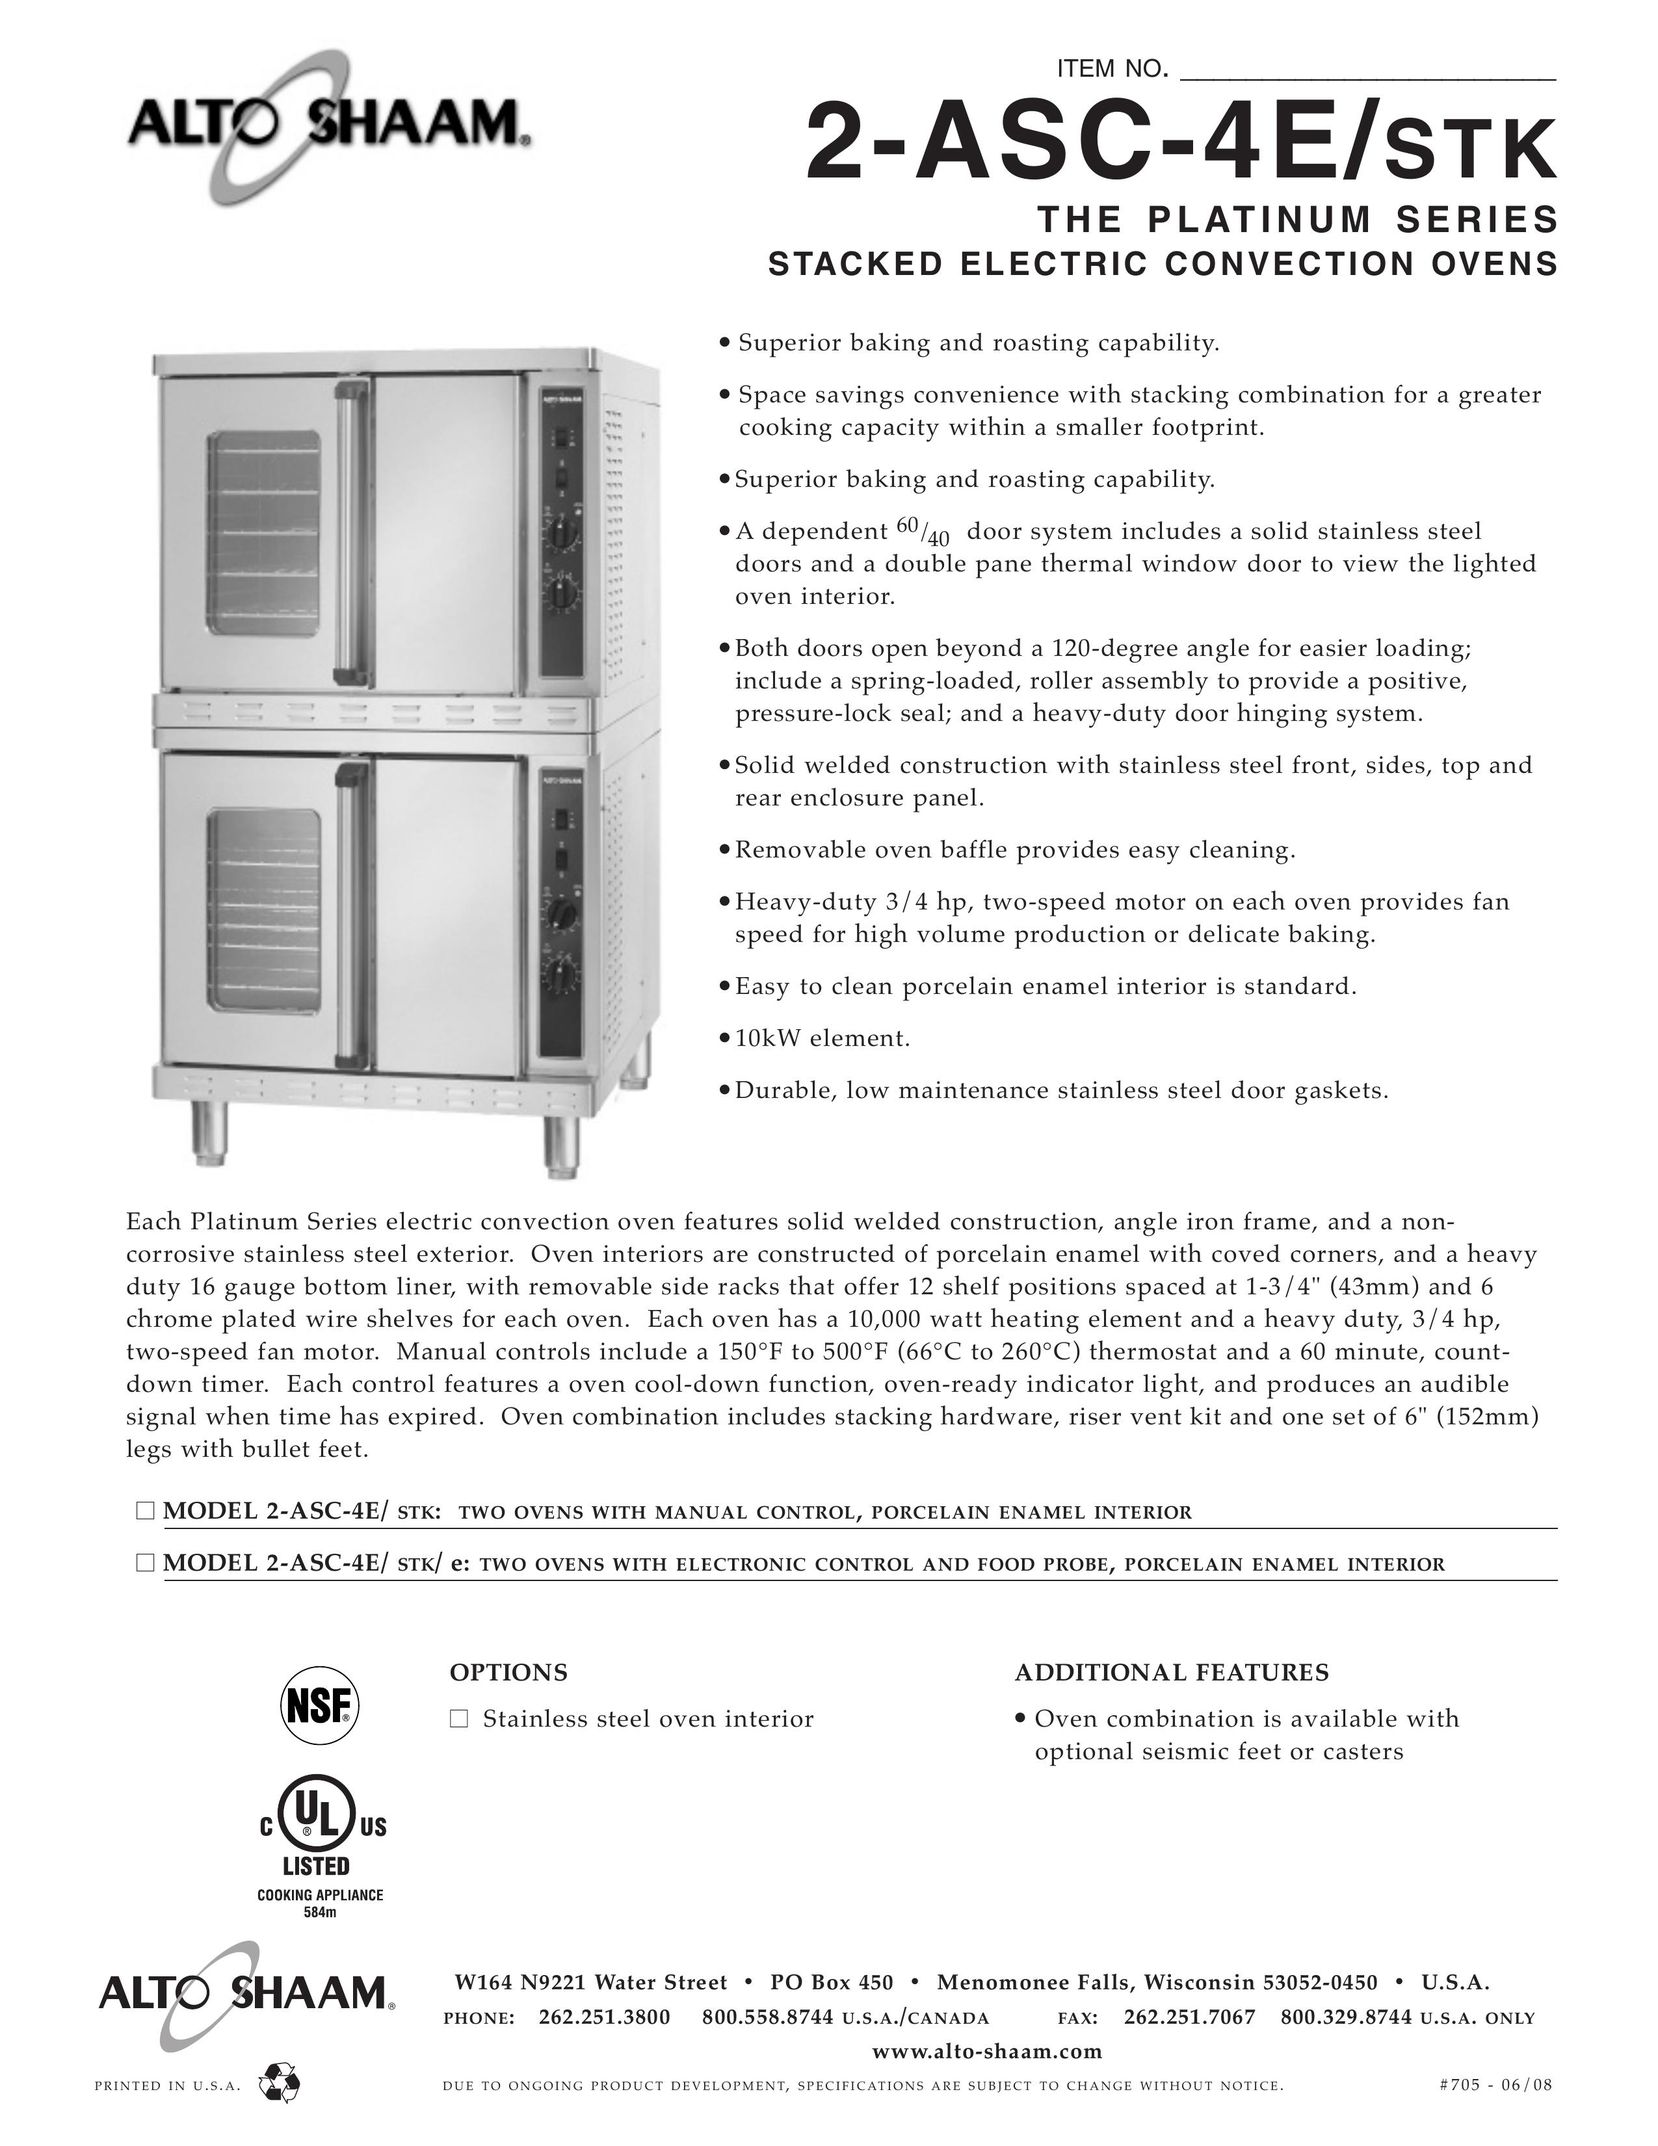 Alto-Shaam 2-ASC-4E/STK Convection Oven User Manual